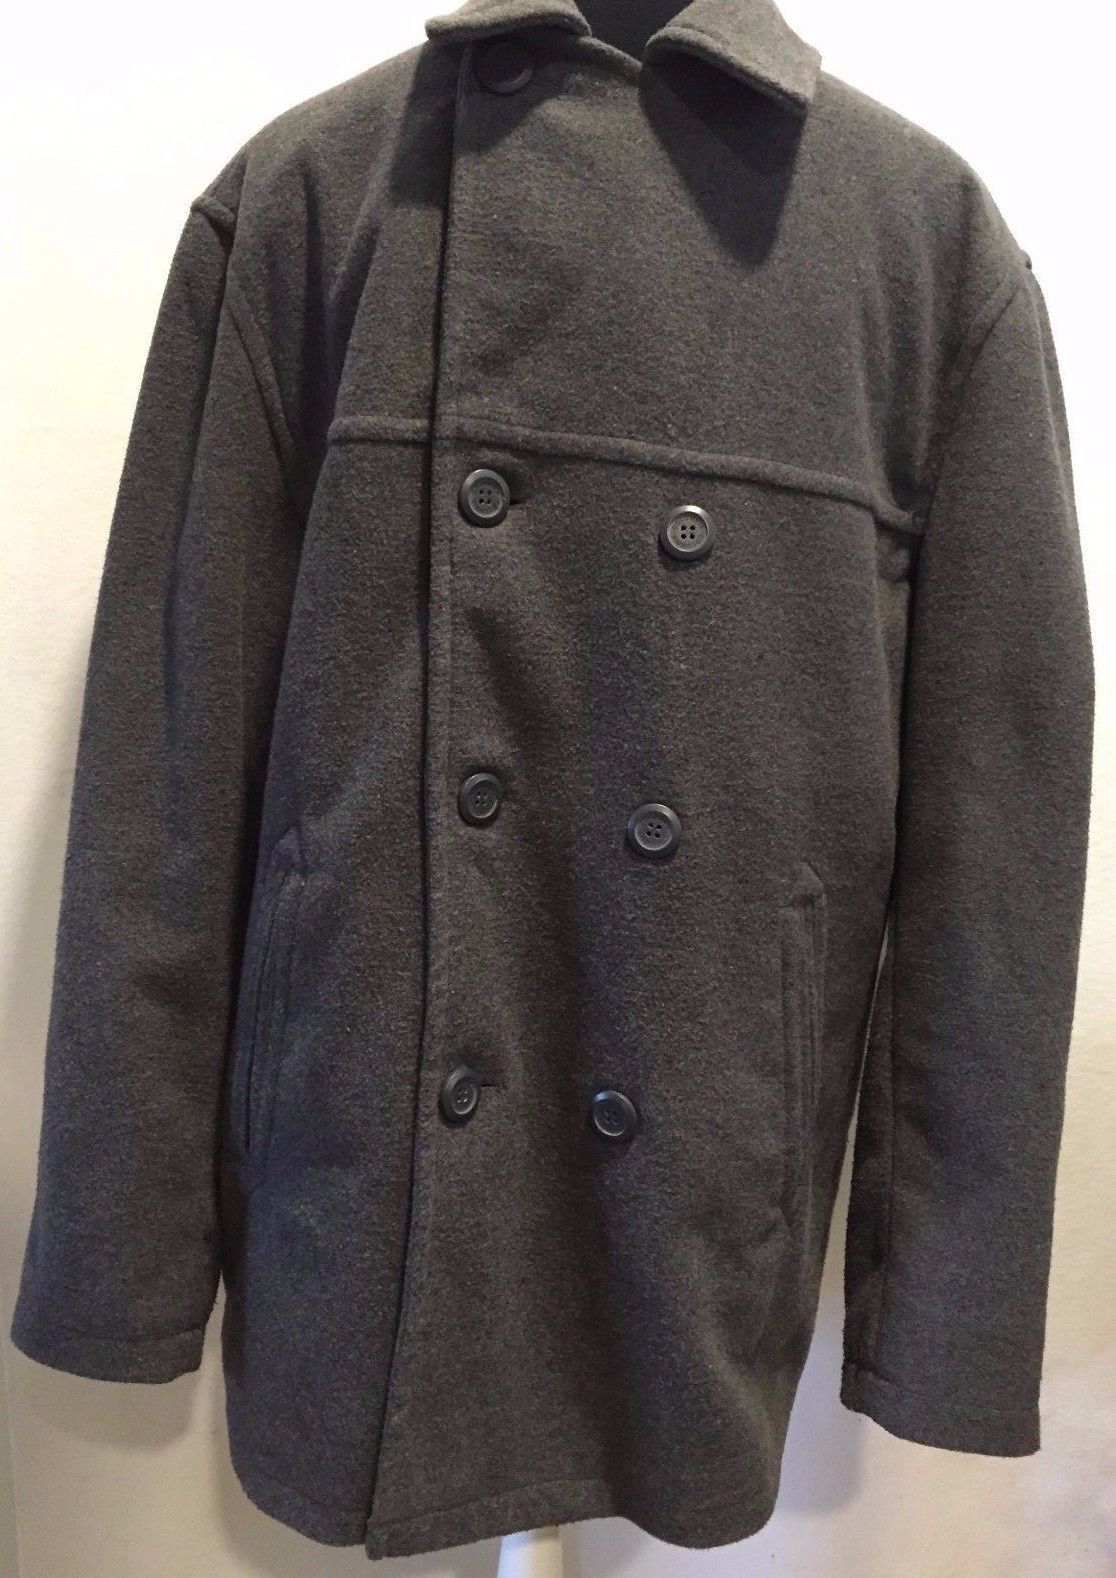 NEW Columbia Sportwear Company Men's Gray Button Jacket Size Large L - $59.99